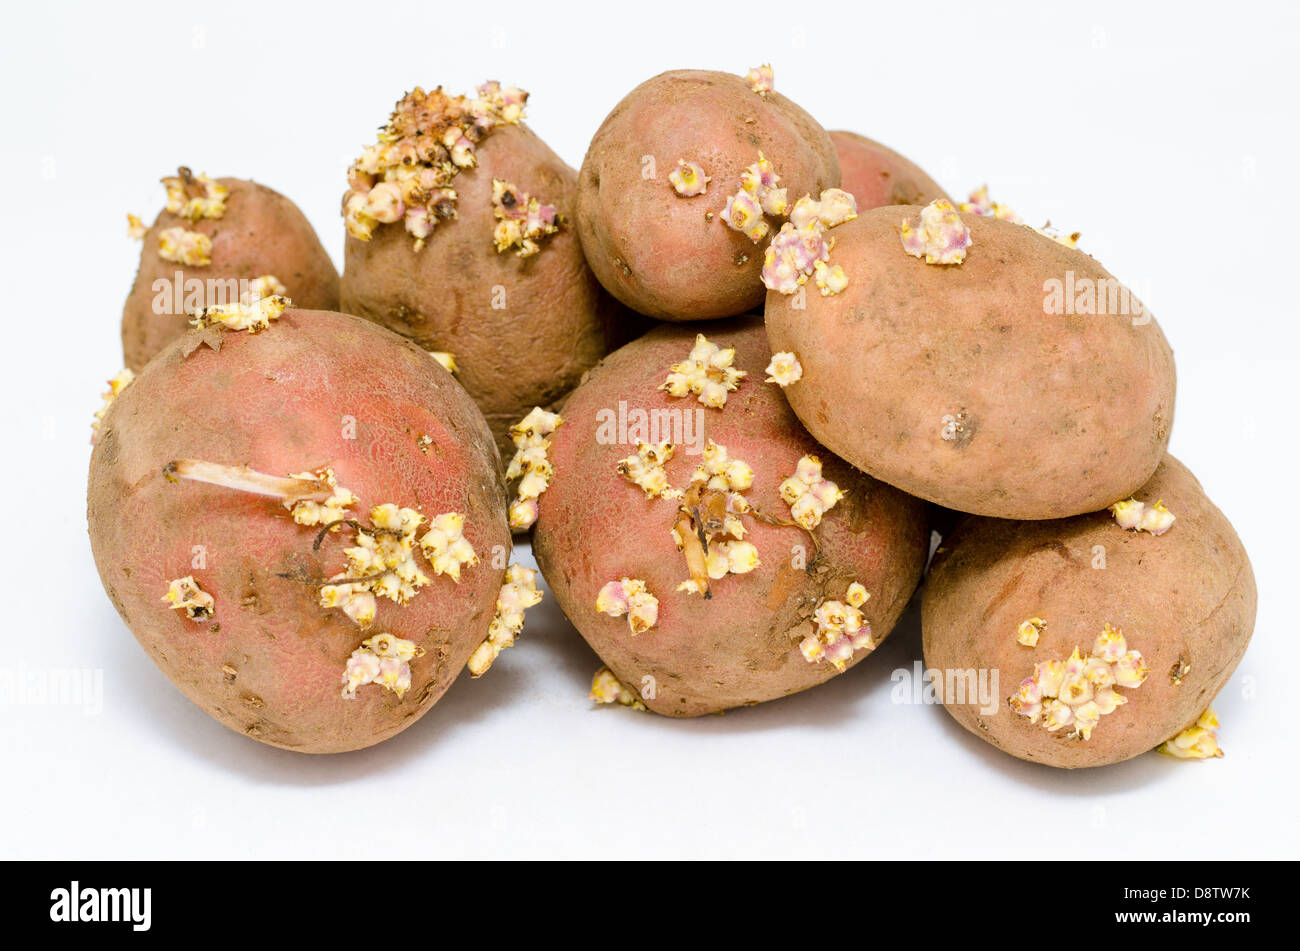 germinating potatoes Stock Photo